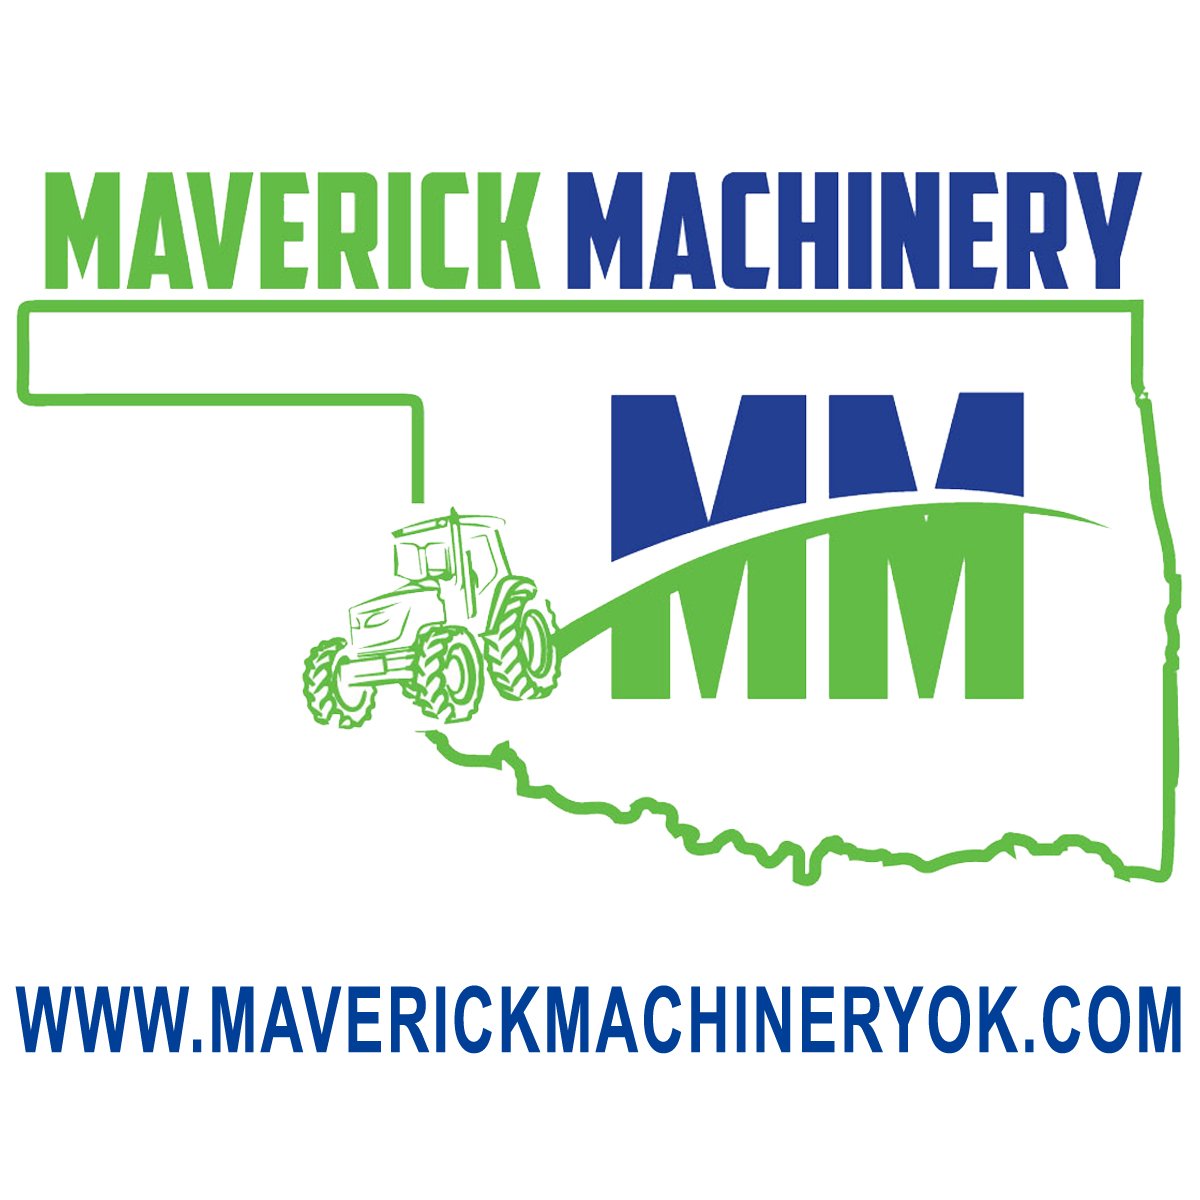 Maverick machinery.jpg